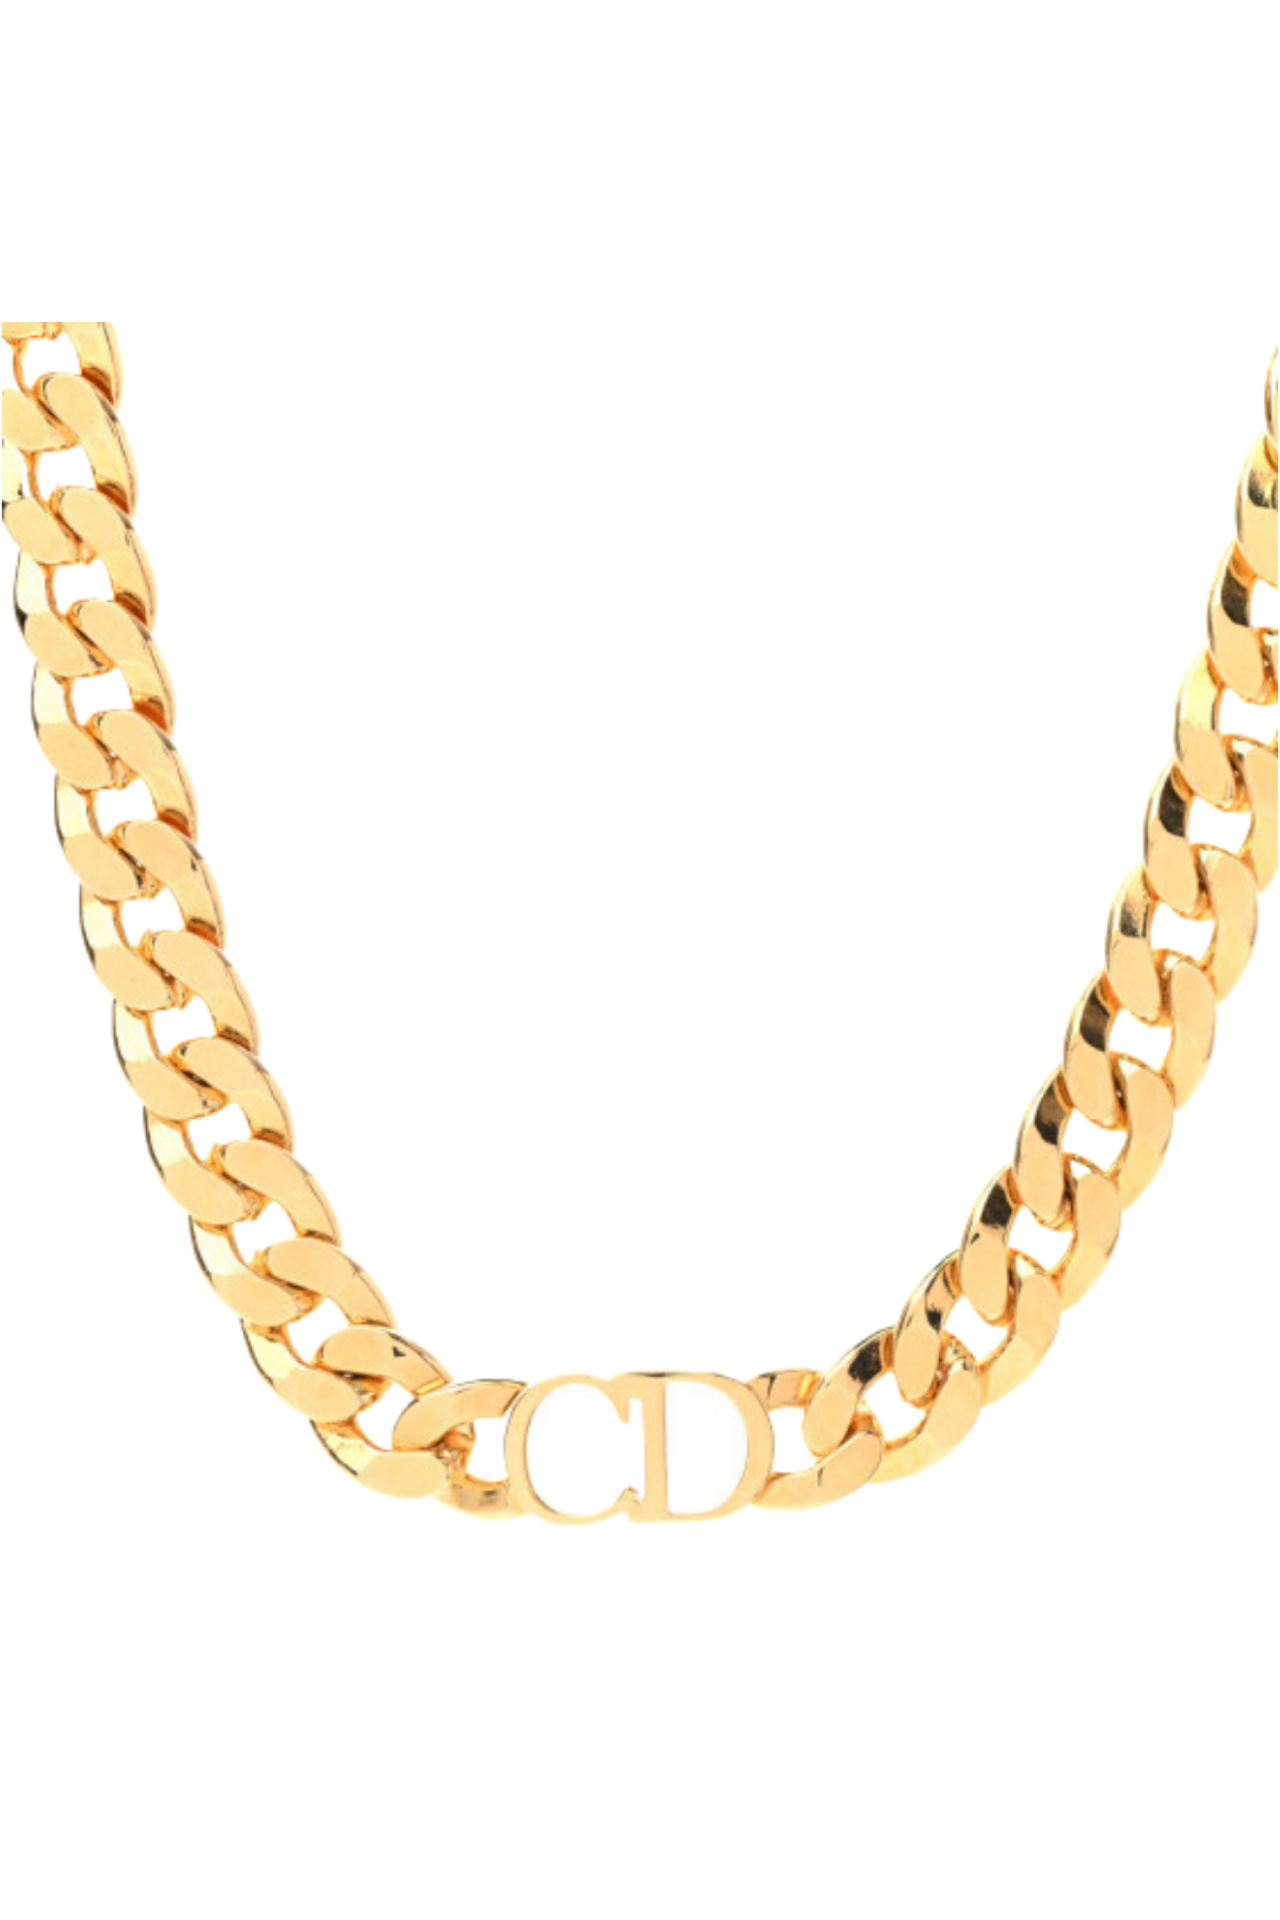 Christian Dior Danseuse Etoile Choker Necklace